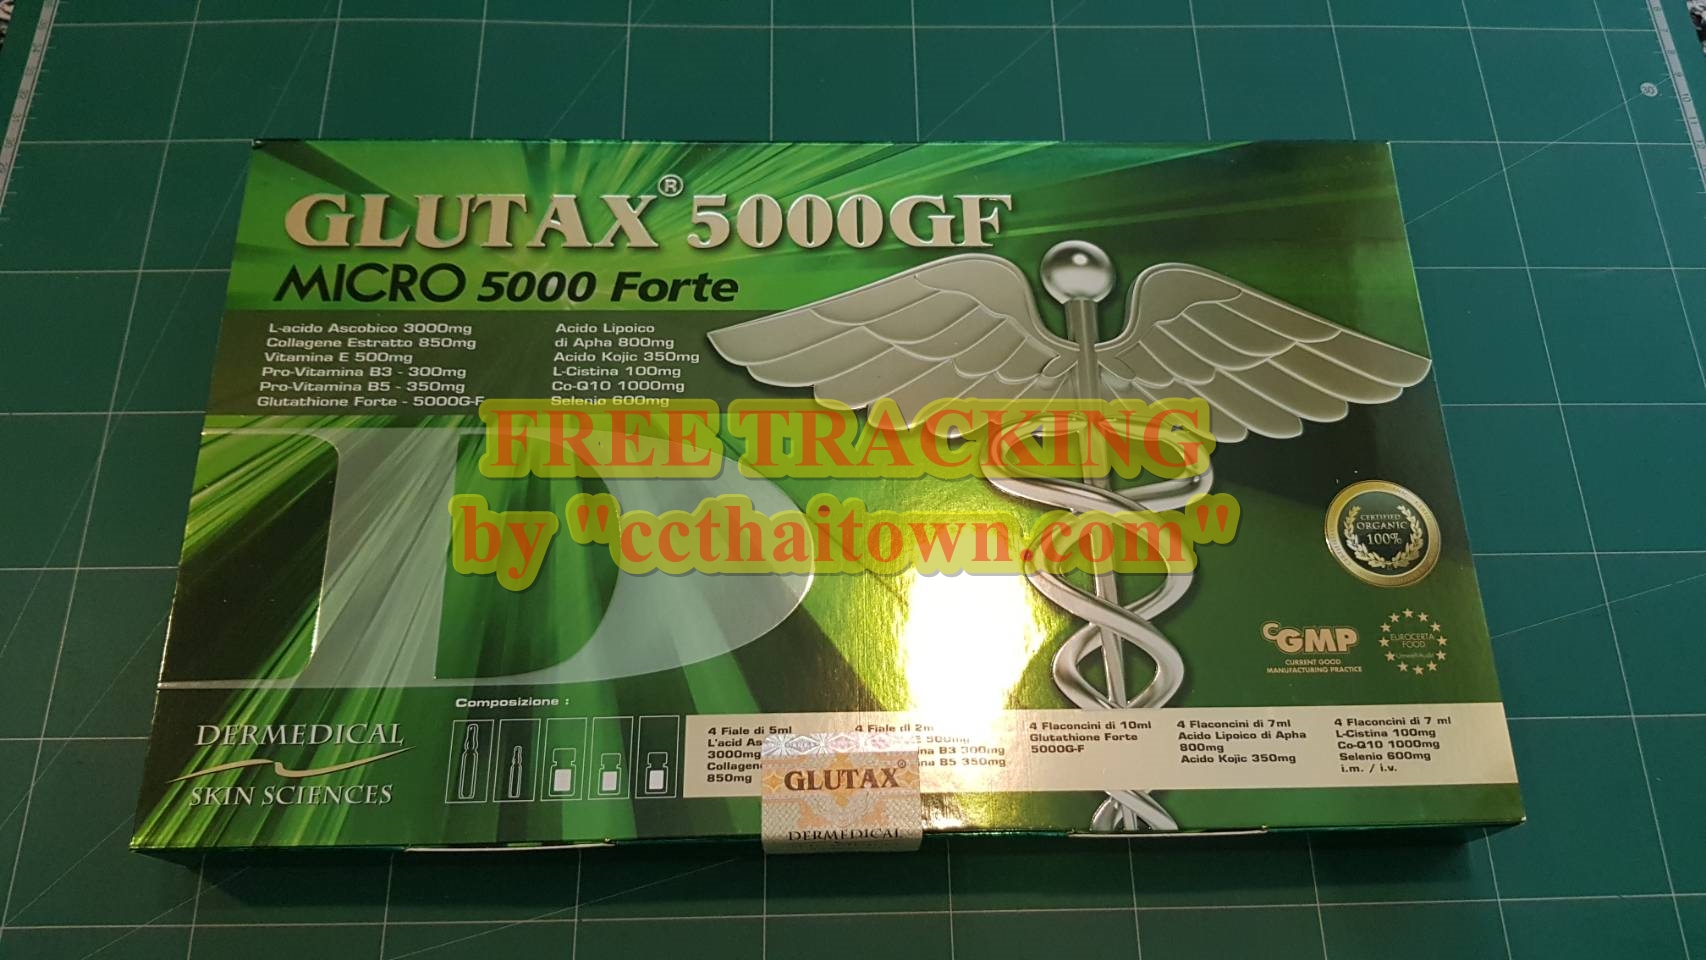 BEST OFFER: [SET 5] NEW MIXING WHITE BIO X (SWITZERLAND) + GLUTAX 230000GK + GLUTAX 5000GF (ITALY)  3 BOXES GLUTATHIONE WHITENING INJECTION by www.ccthaitown.com